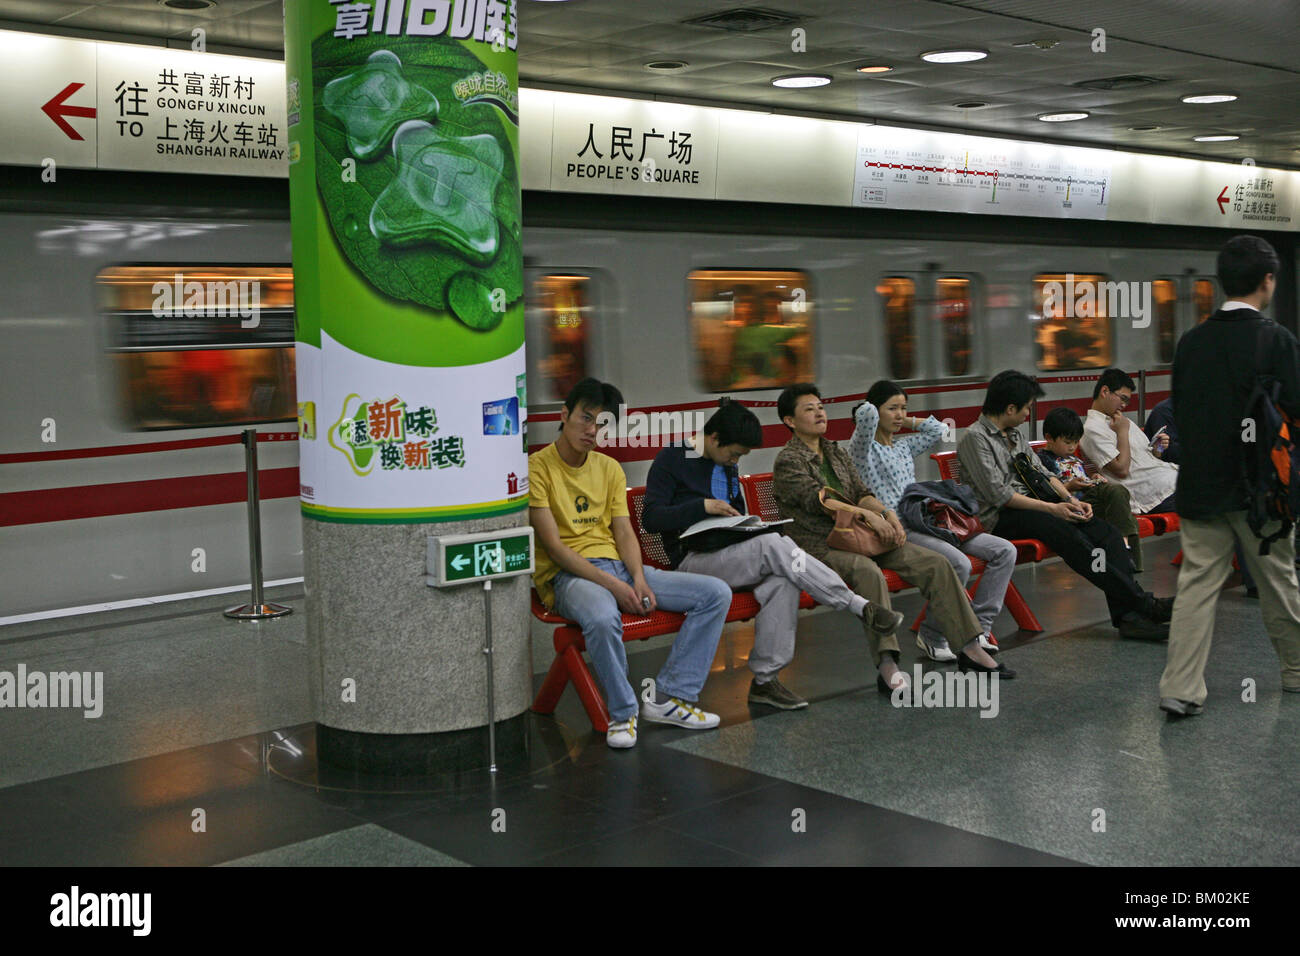 Metro Shanghai, mass transportation system, subway, public transport, underground station, waiting passengers, Werbeplakat, post Stock Photo